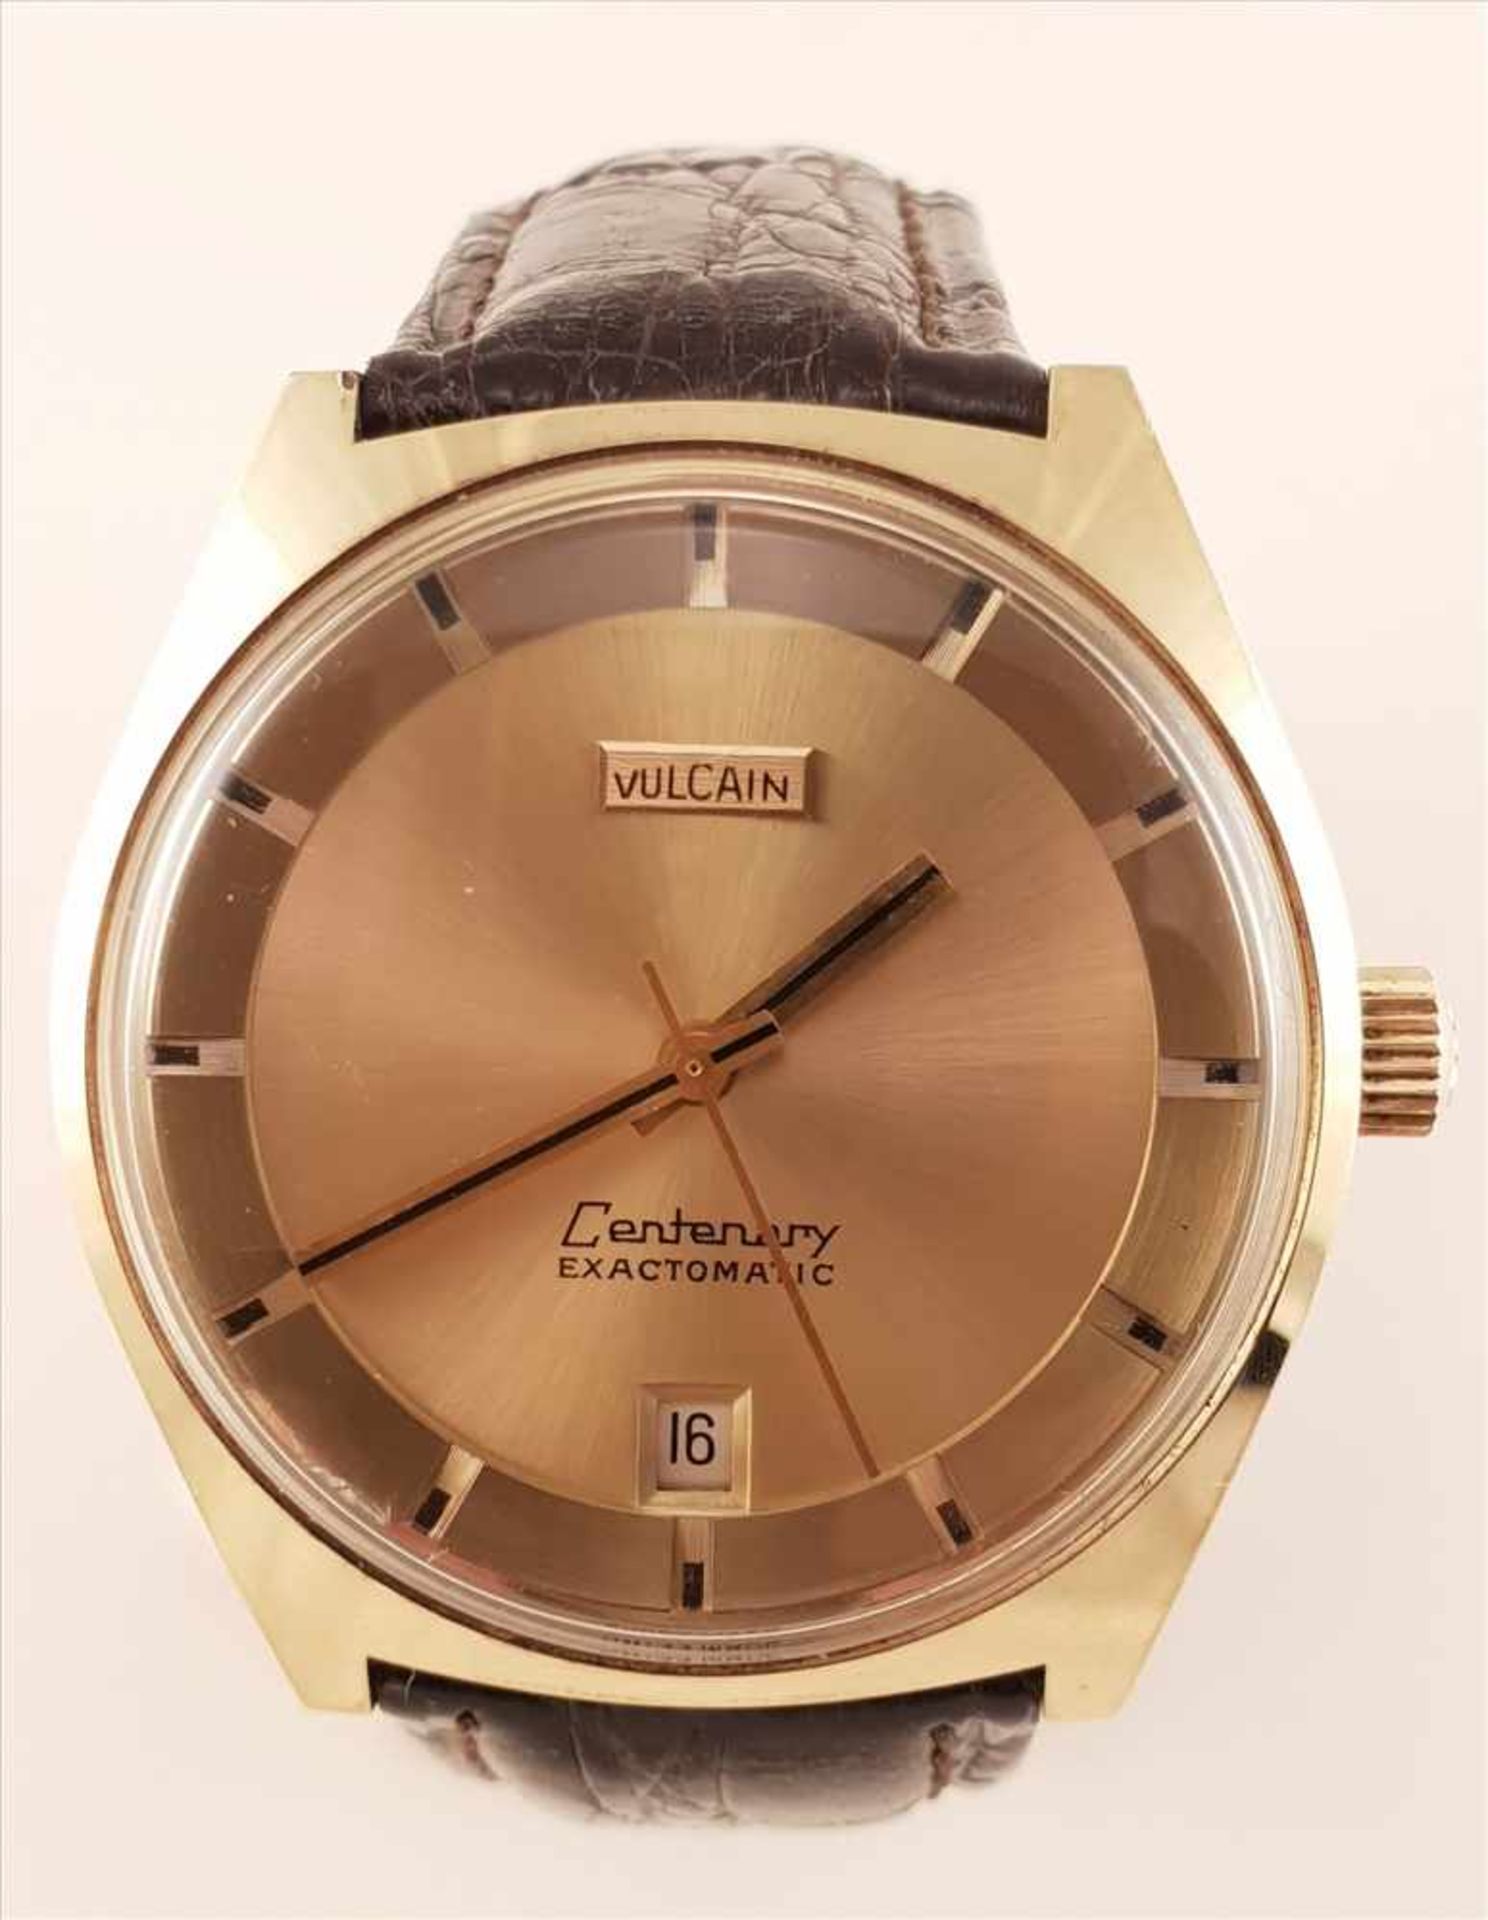 VULCAIN CENTENARY Exactomatic , Armbanduhr , Metall vergoldet , Automatic, 1970er Jahre, Gehäusenr.: